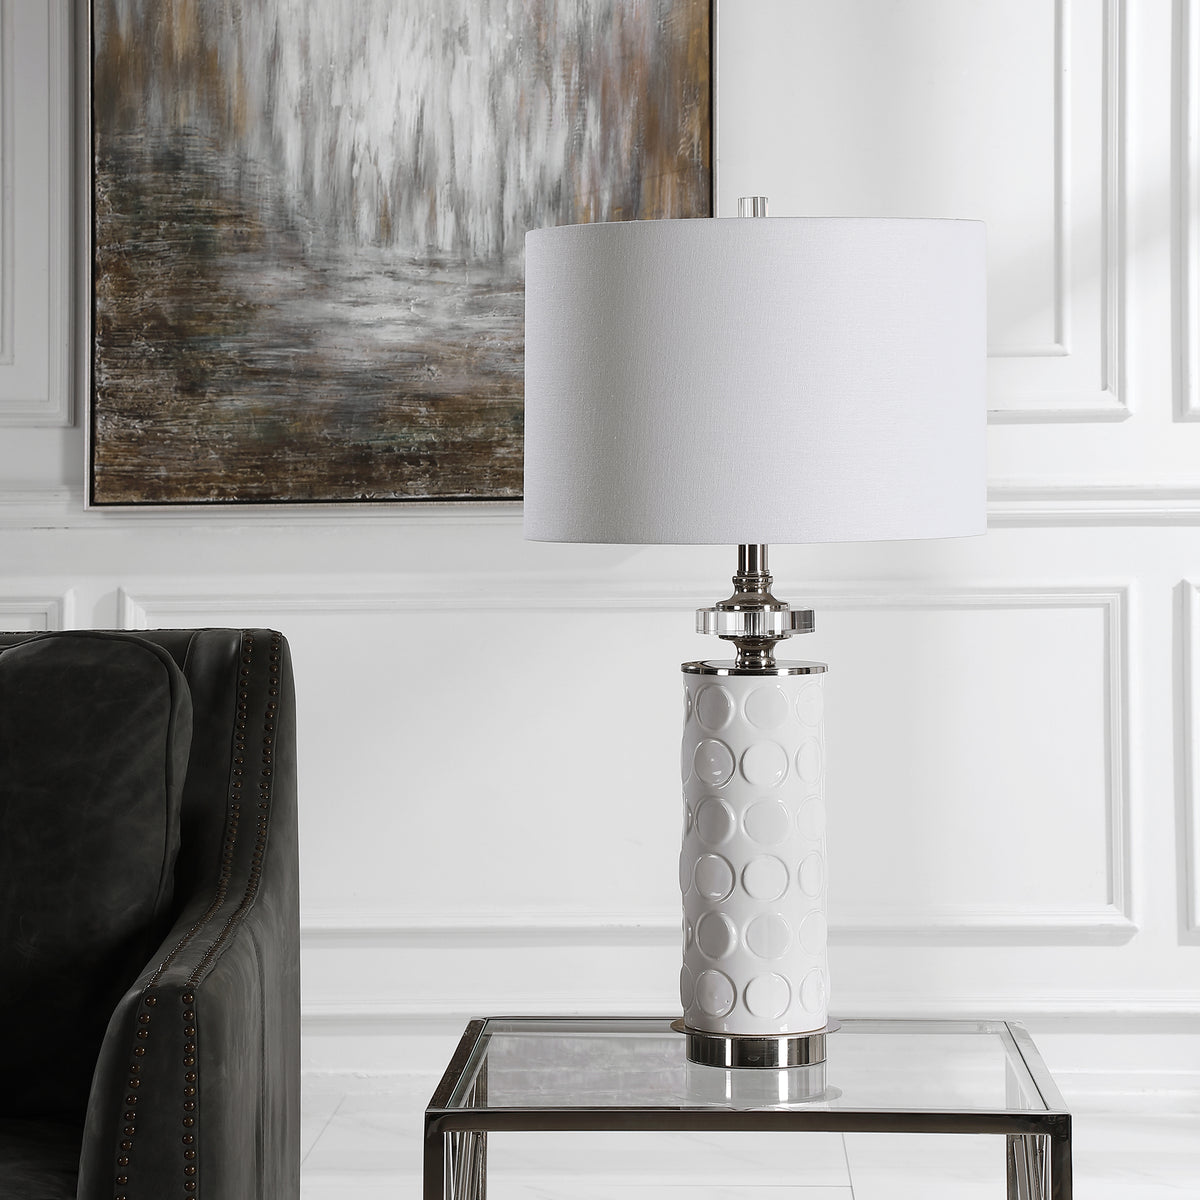 Calia White Table Lamp